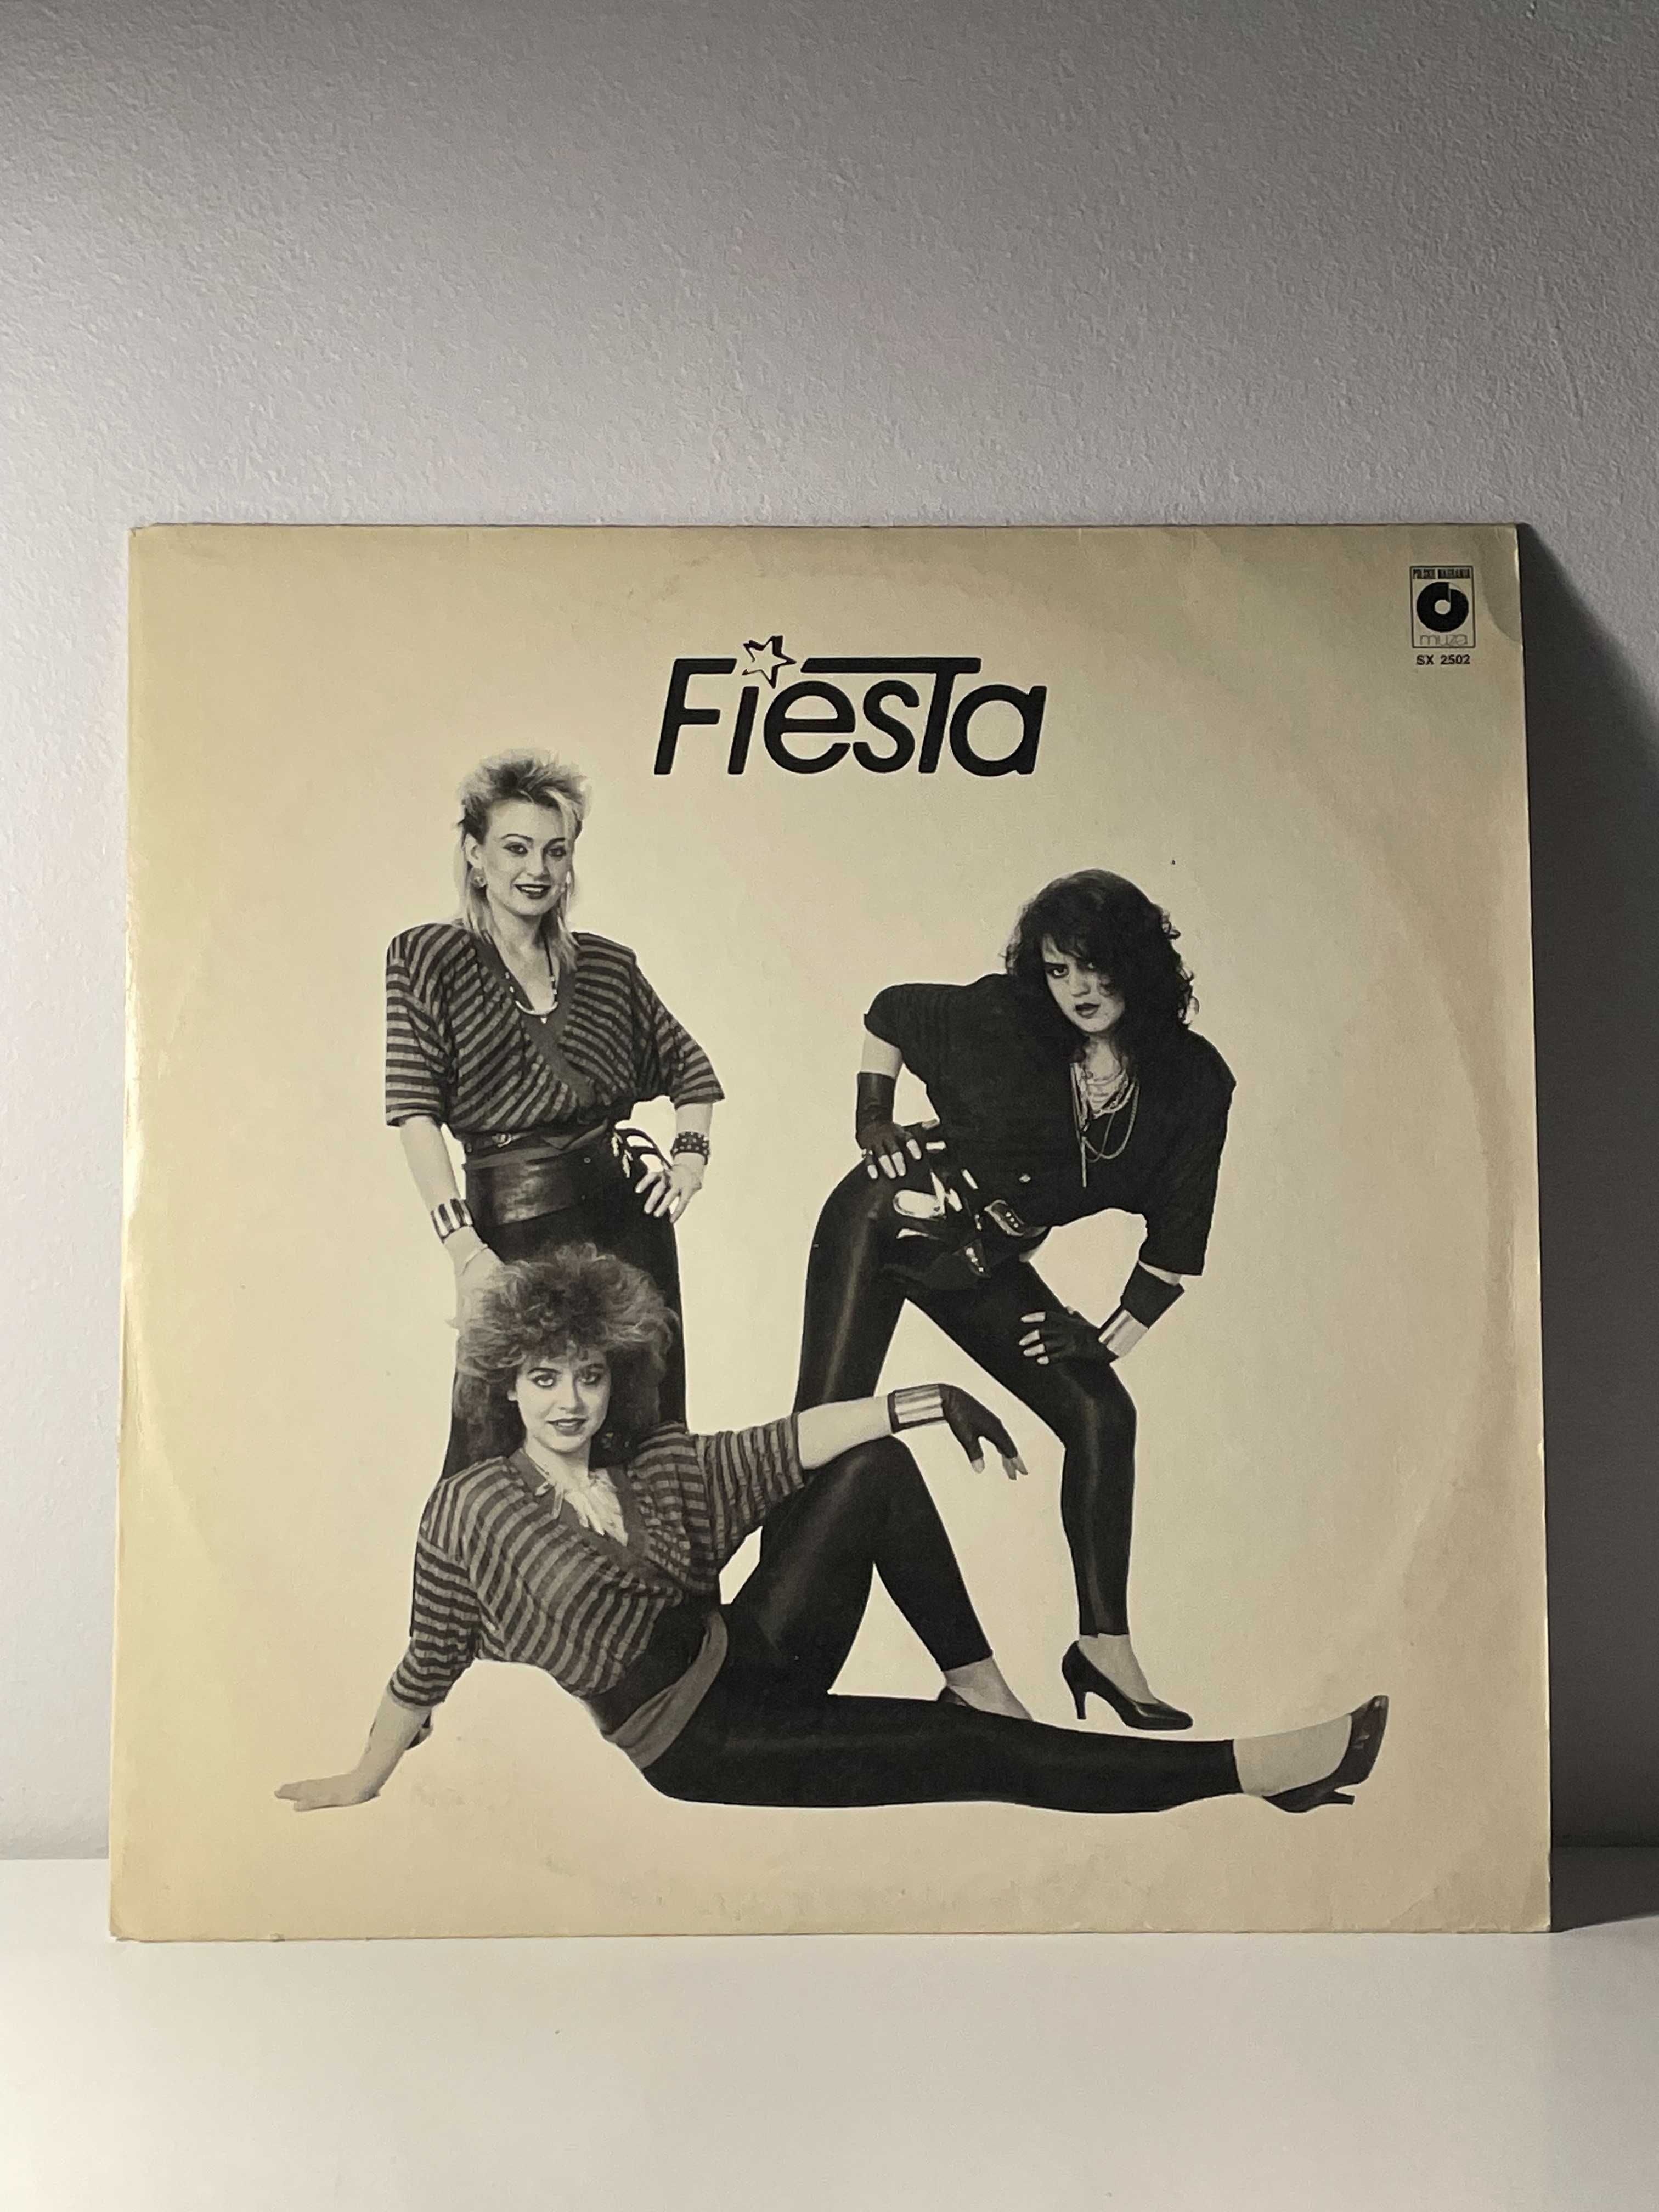 Płyta winylowa Fiesta "Fiesta"